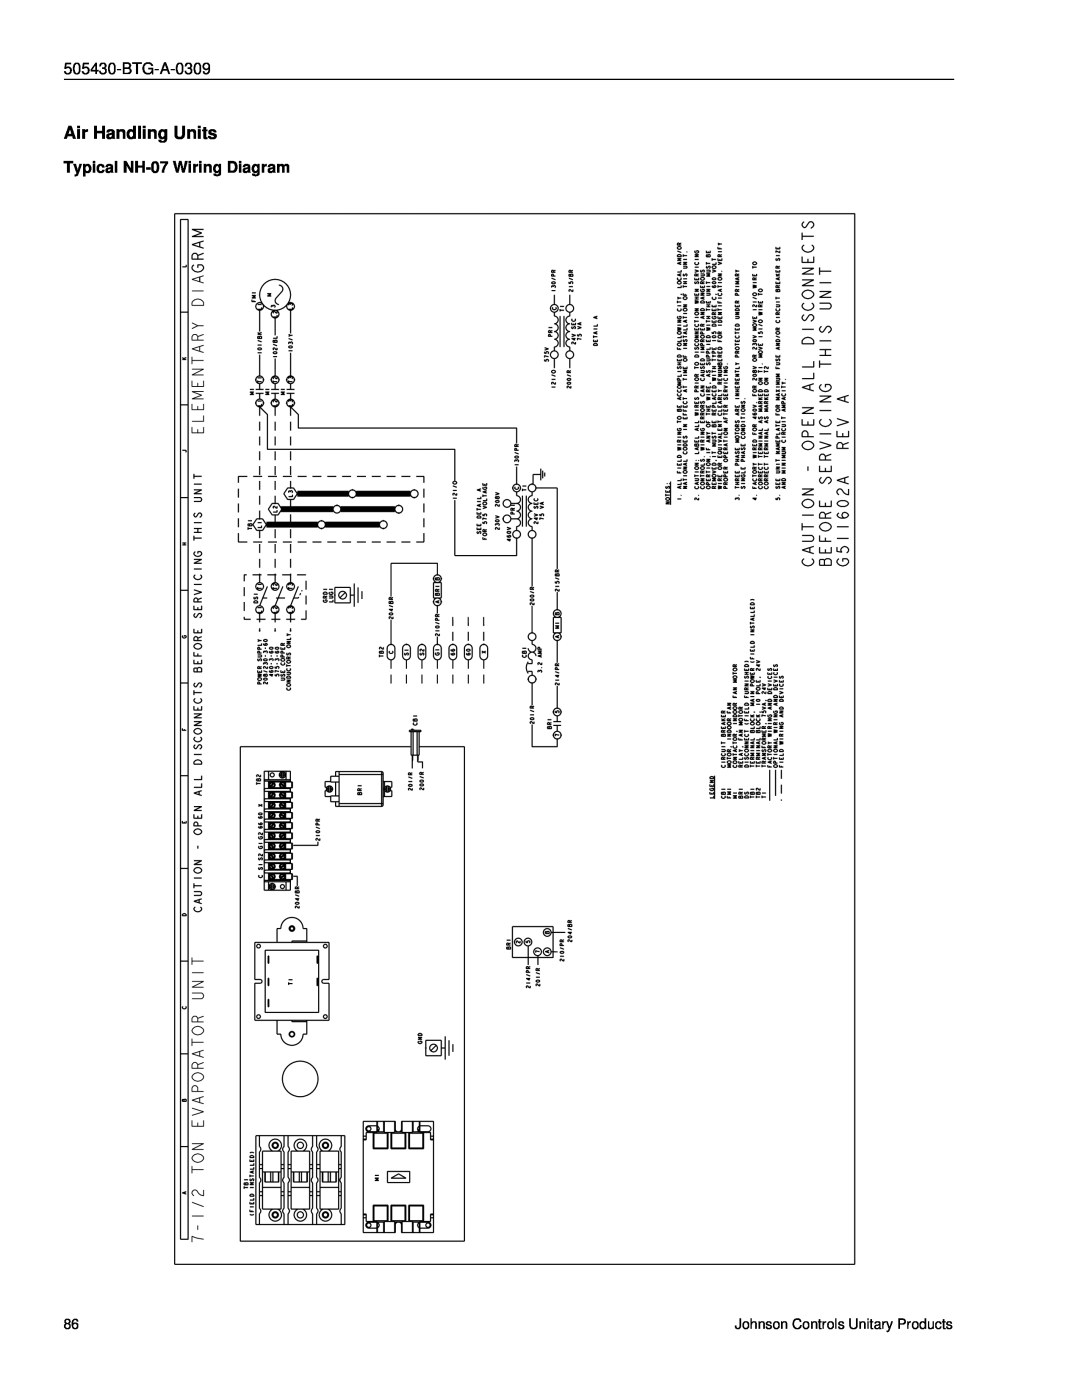 Johnson Controls R-410A manual Air Handling Units, Typical NH-07Wiring Diagram 